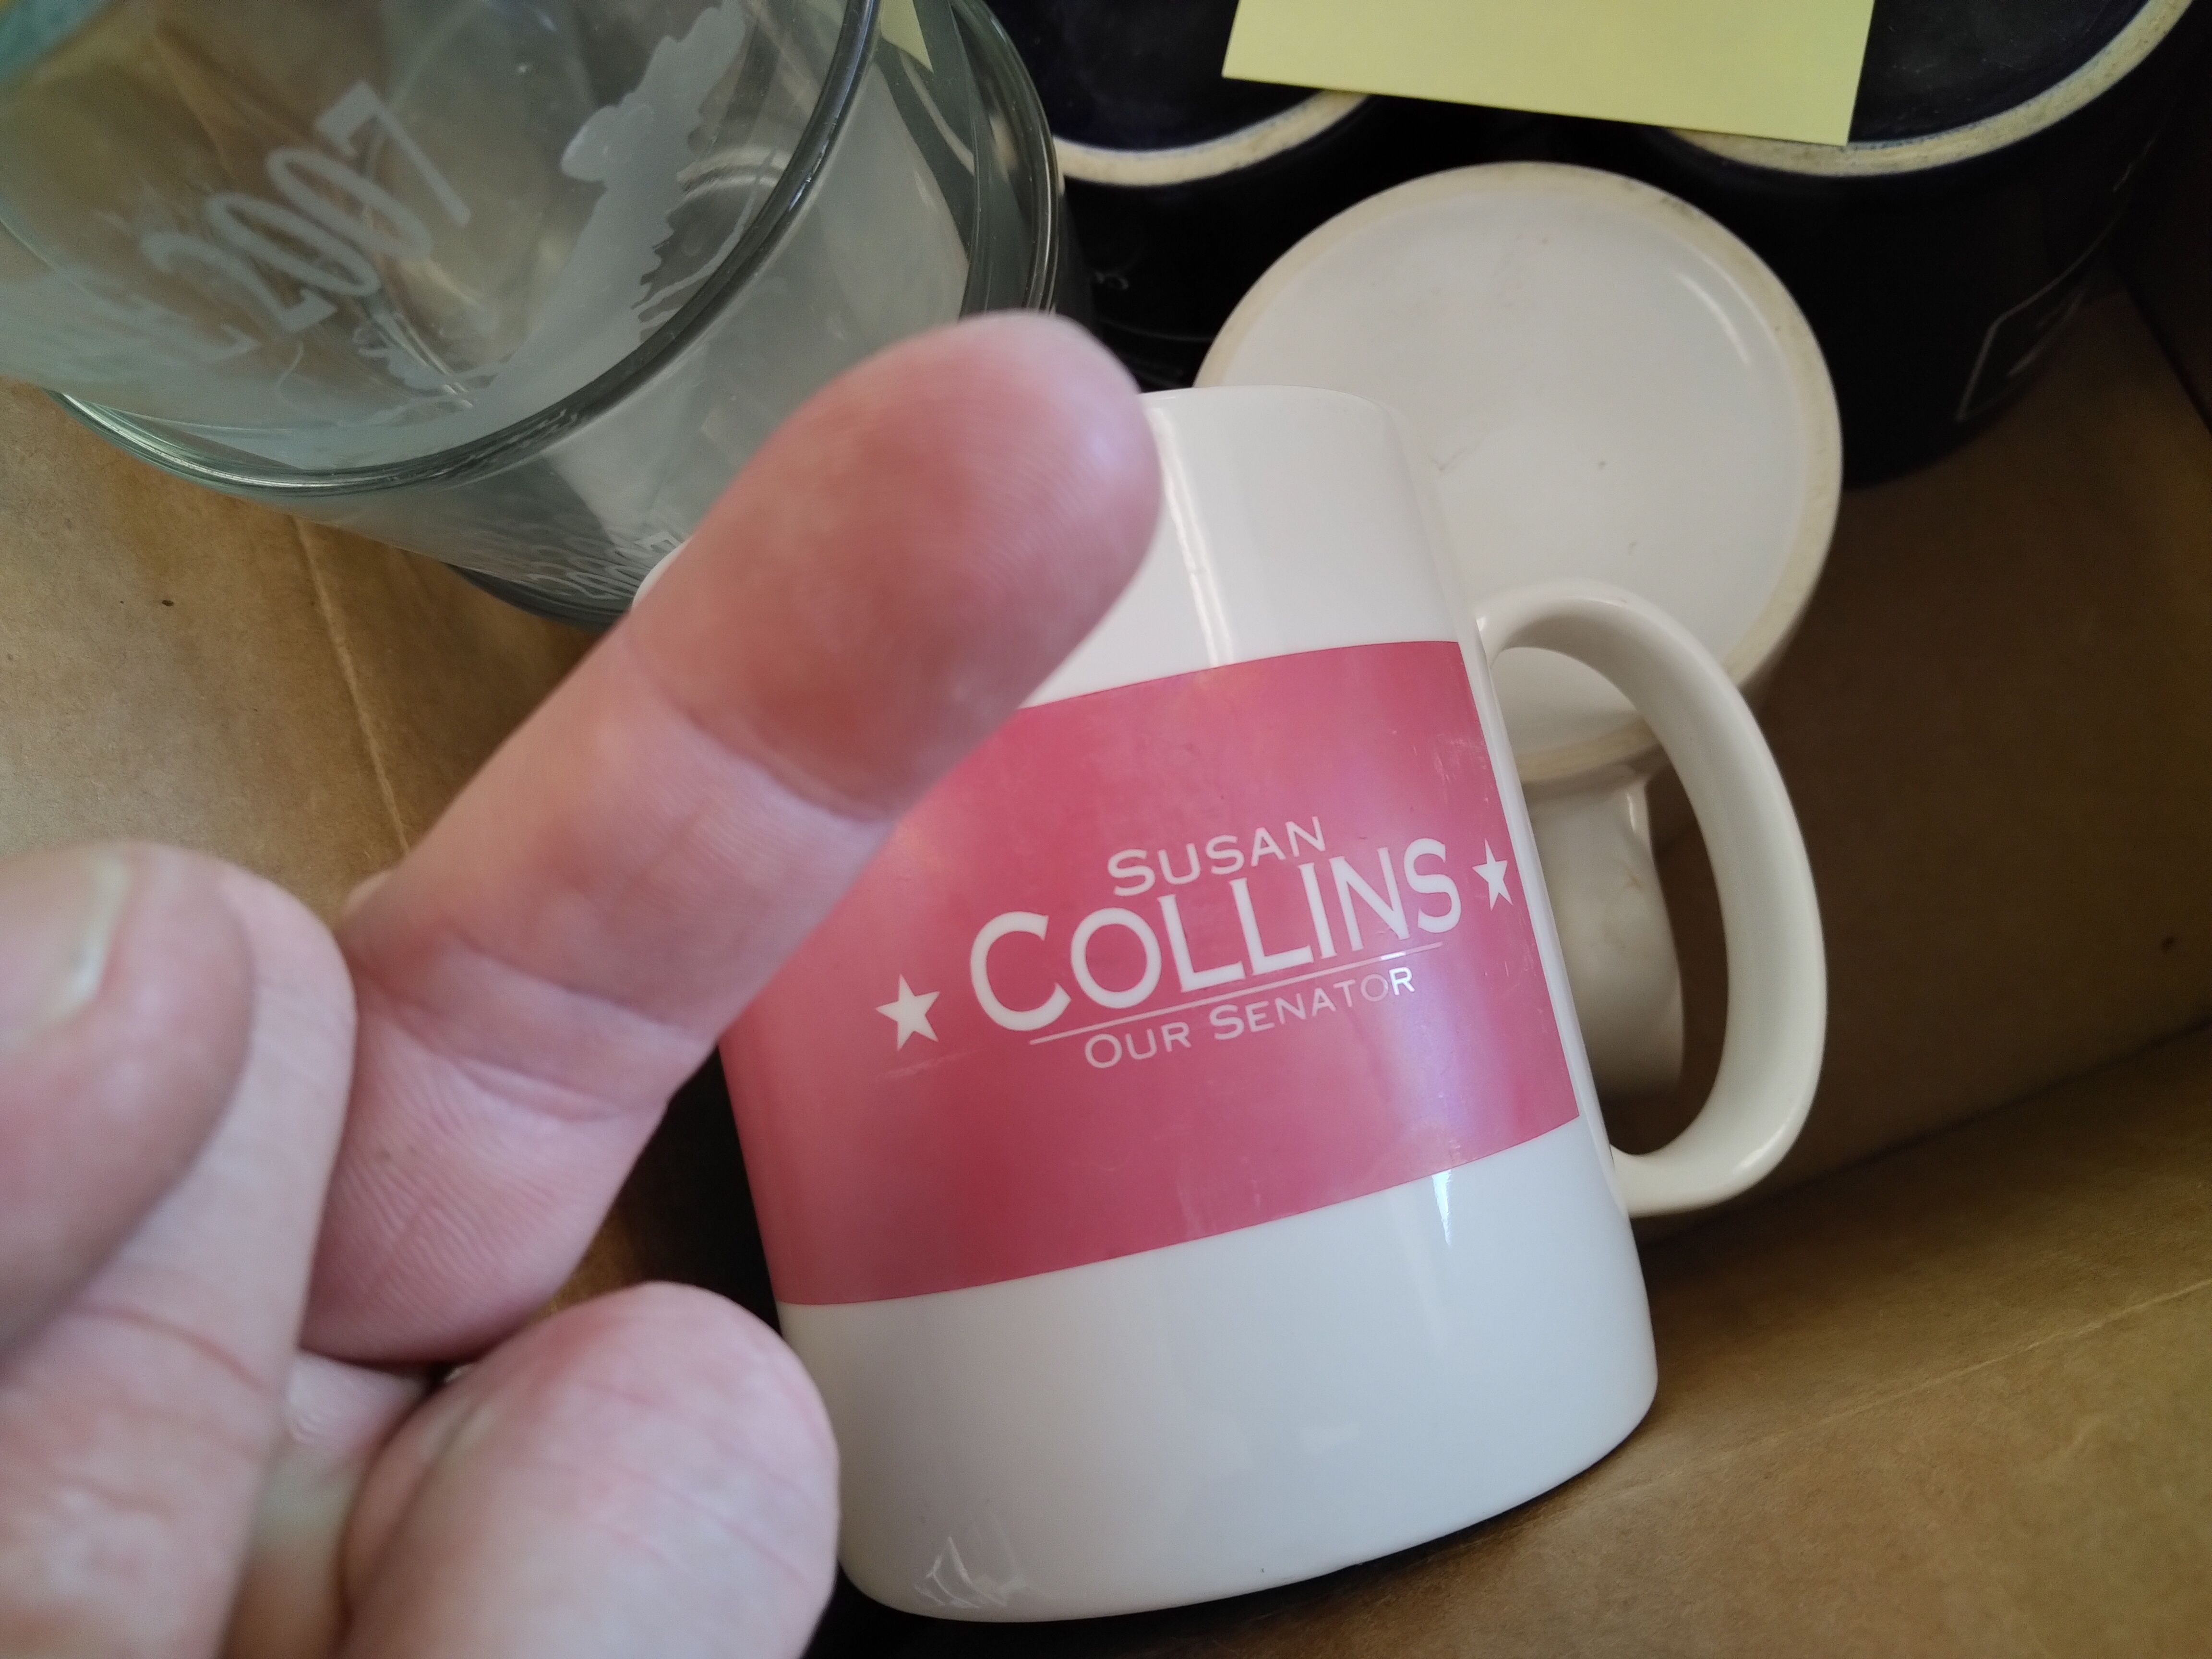 collins mug.jpg